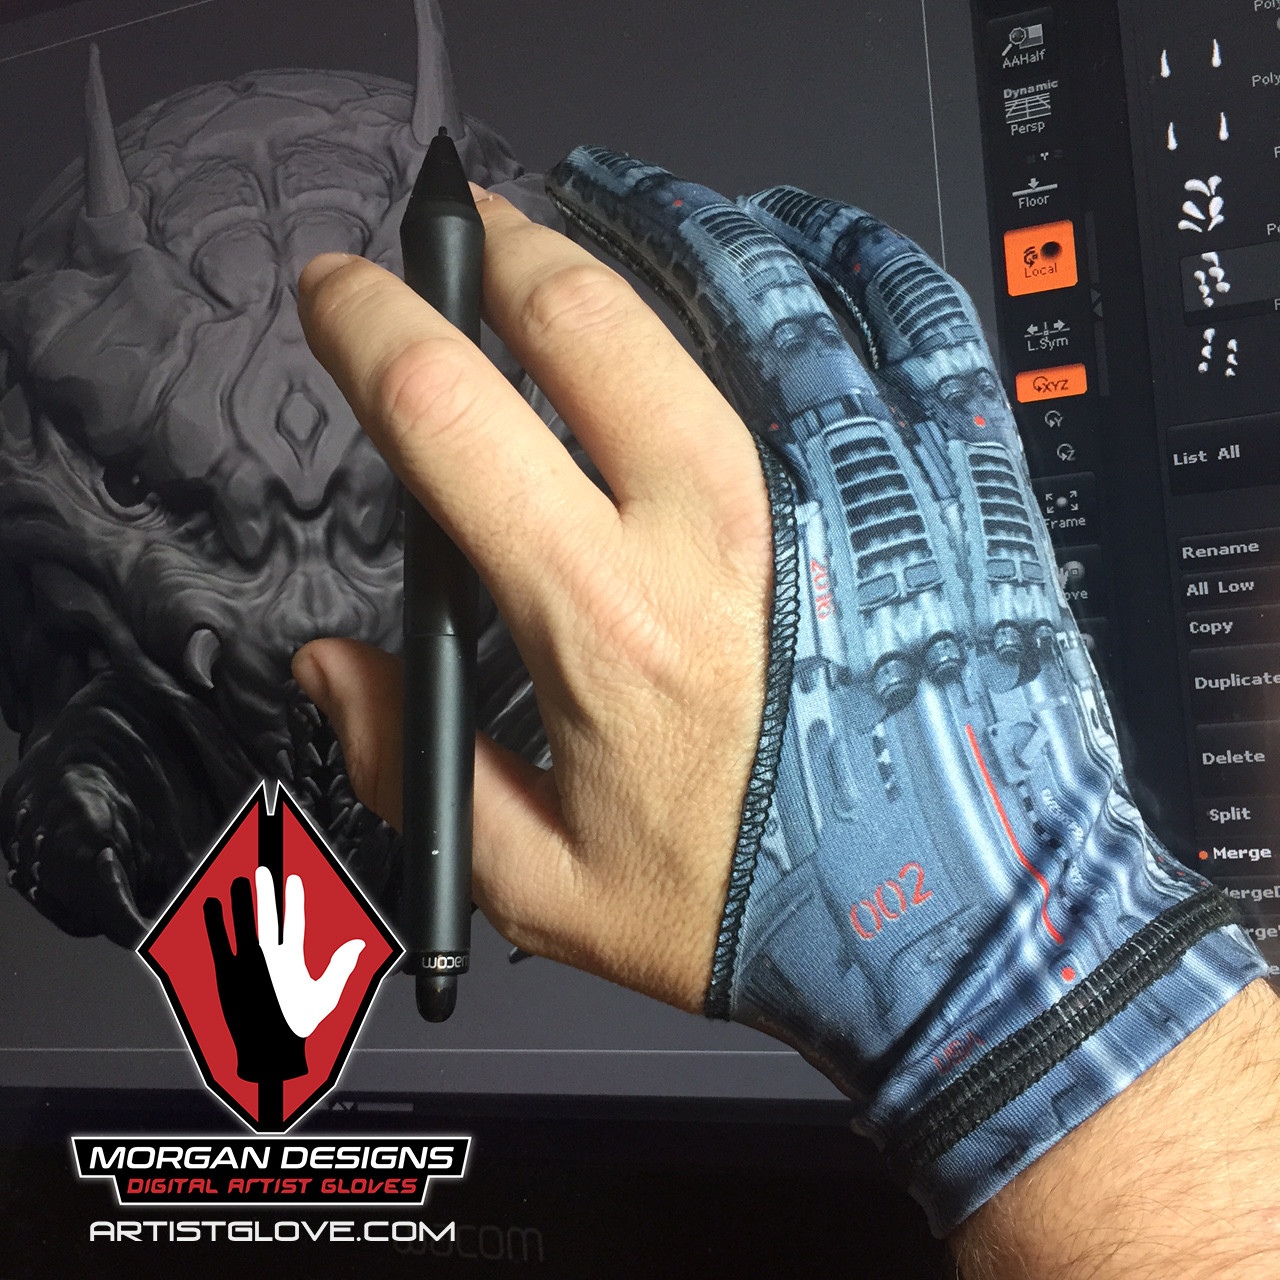 ArtStation - The Strike Force Artist Glove by Morgan Designs